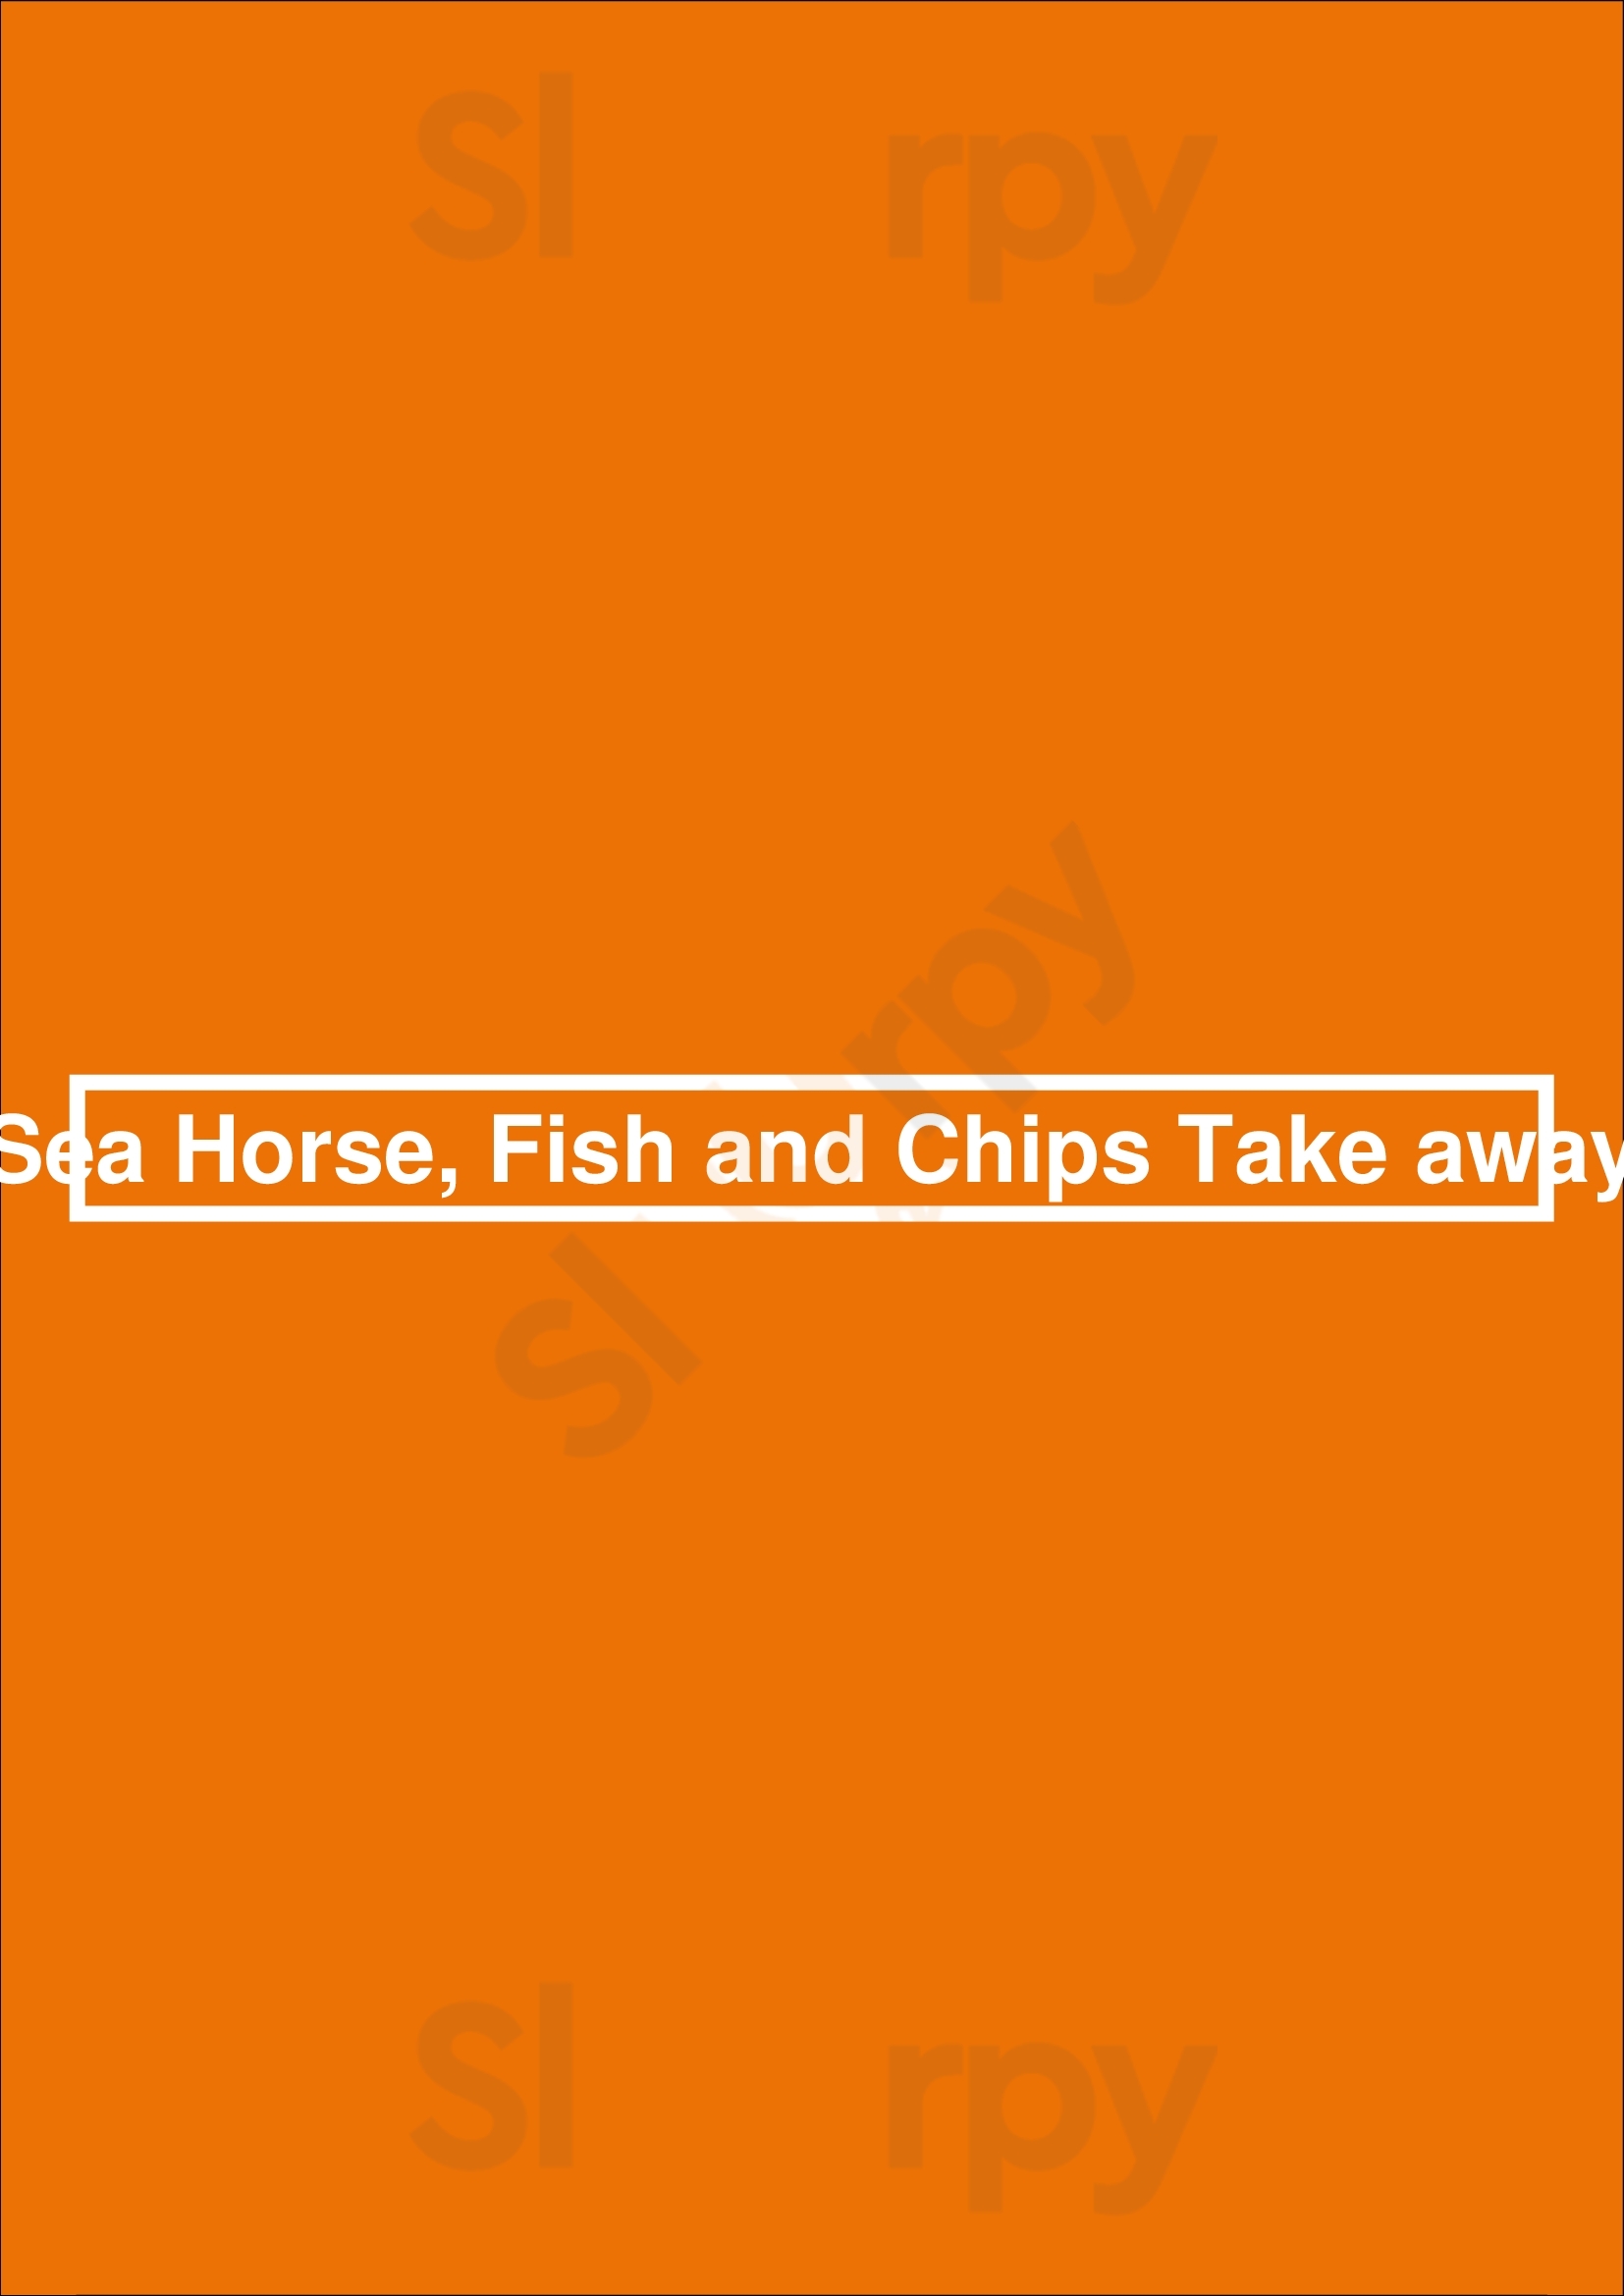 Seahorse Fish Bar Hove Menu - 1